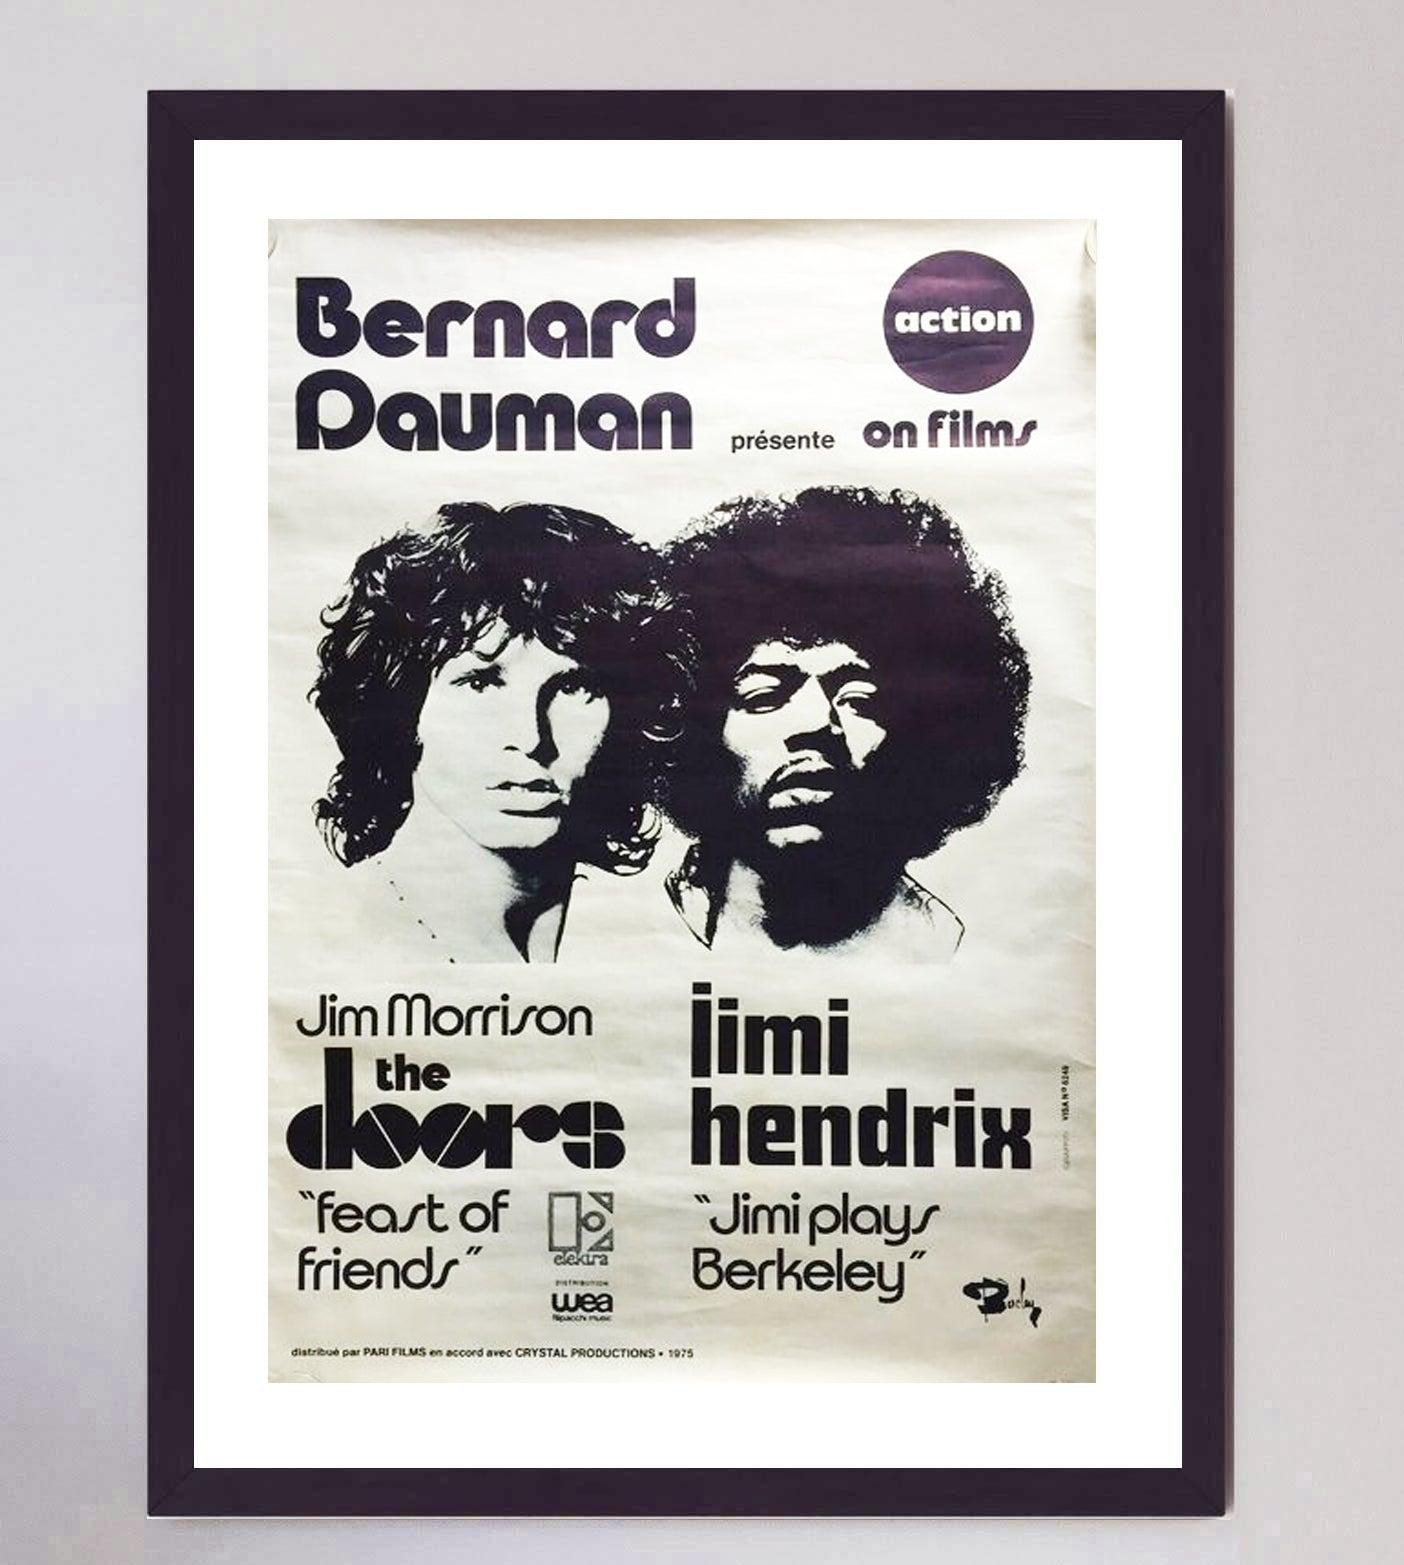 1975 The Doors & Jimi Hendrix, Bernard Dauman Presents Original Vintage Poster In Good Condition For Sale In Winchester, GB